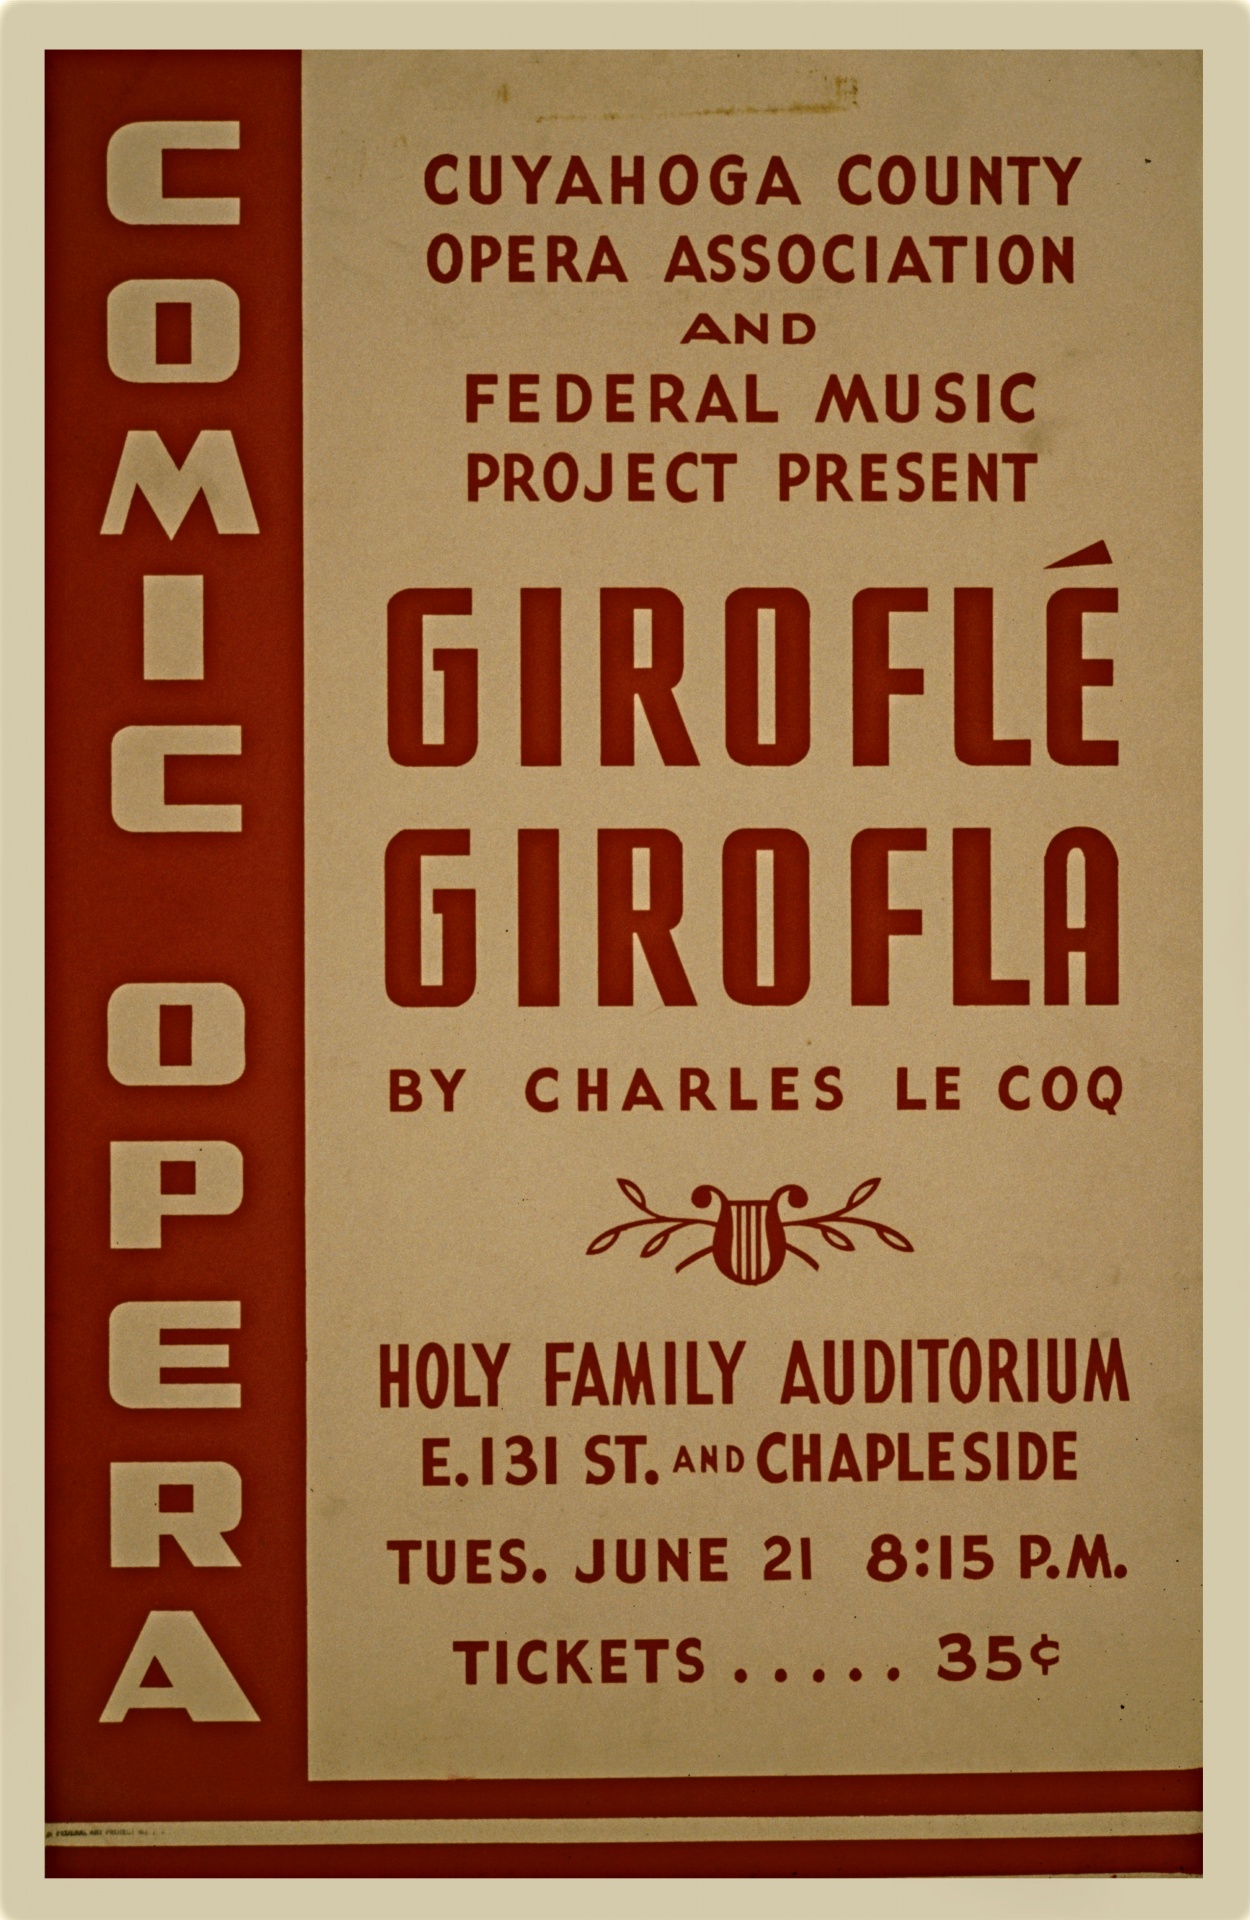 Vintage Music Poster